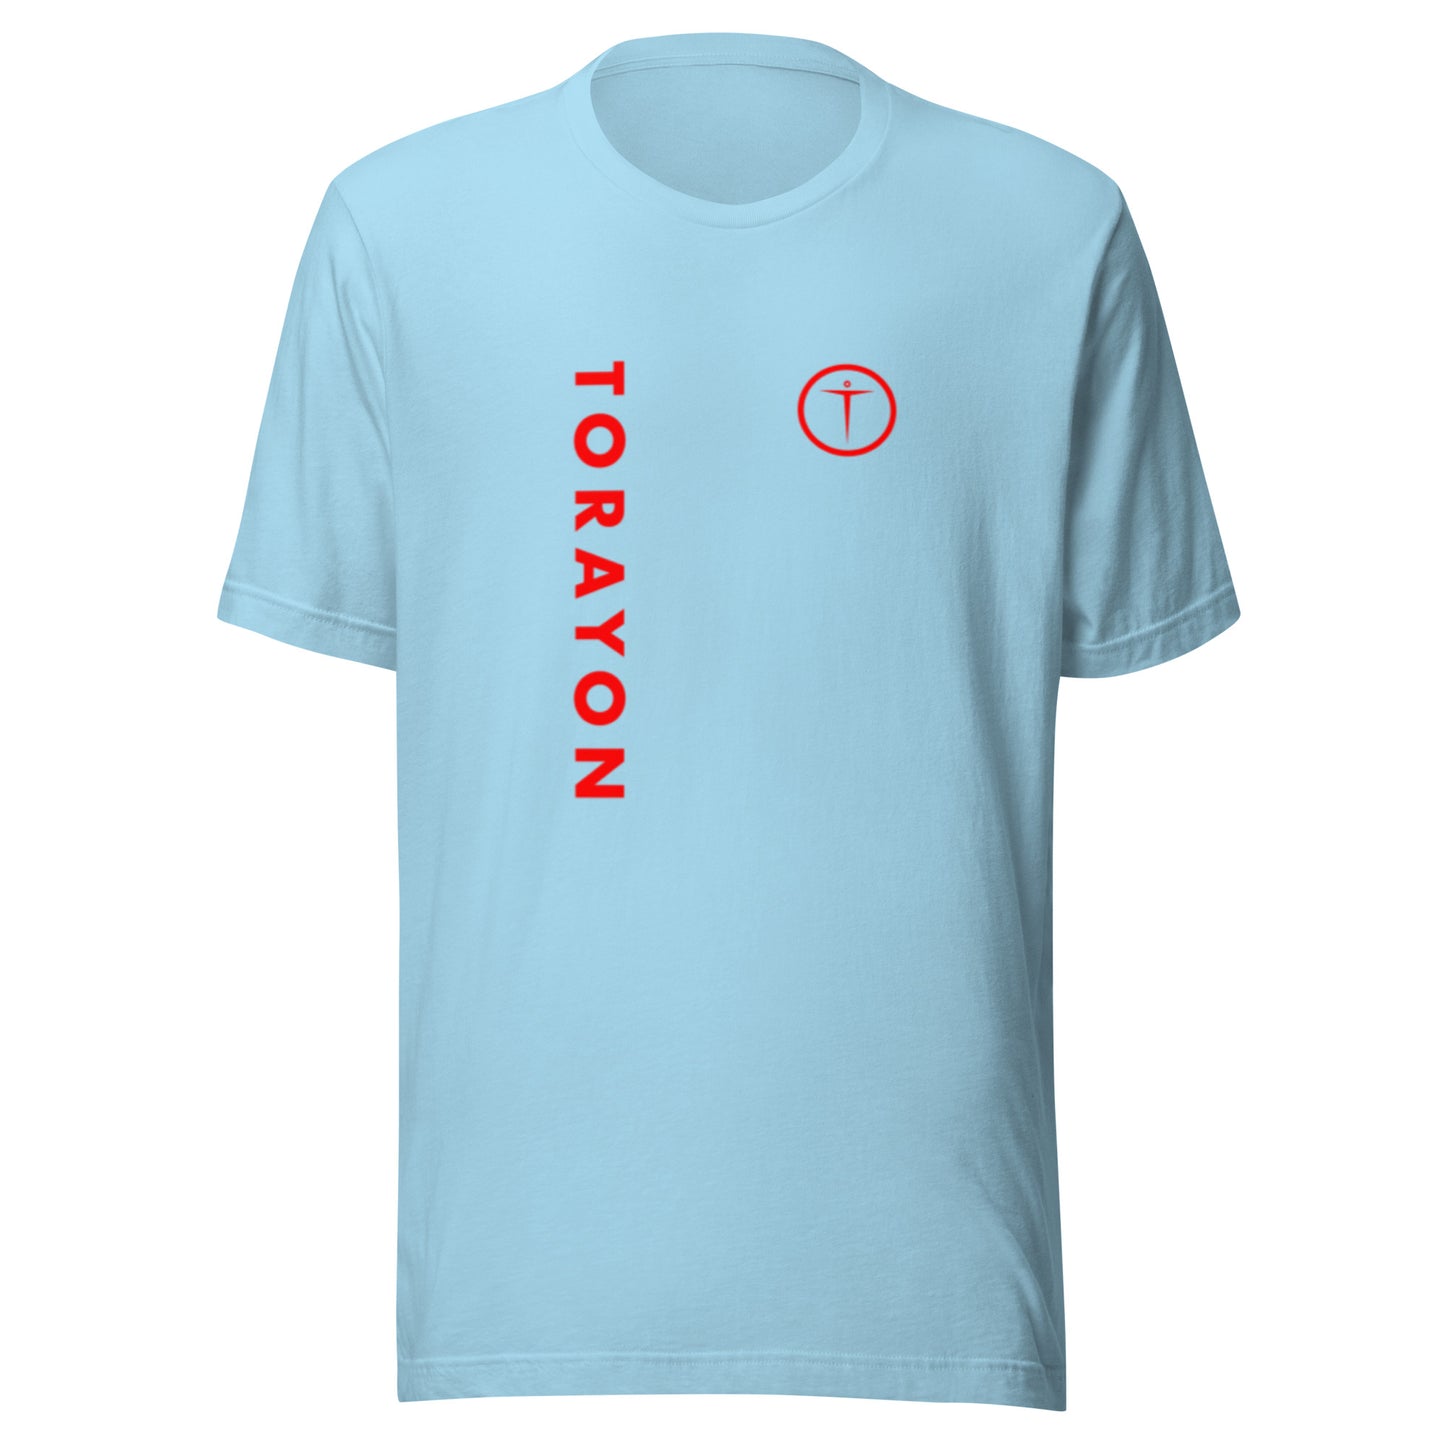 TORAYON [TORONTO] Series Unisex t-shirt